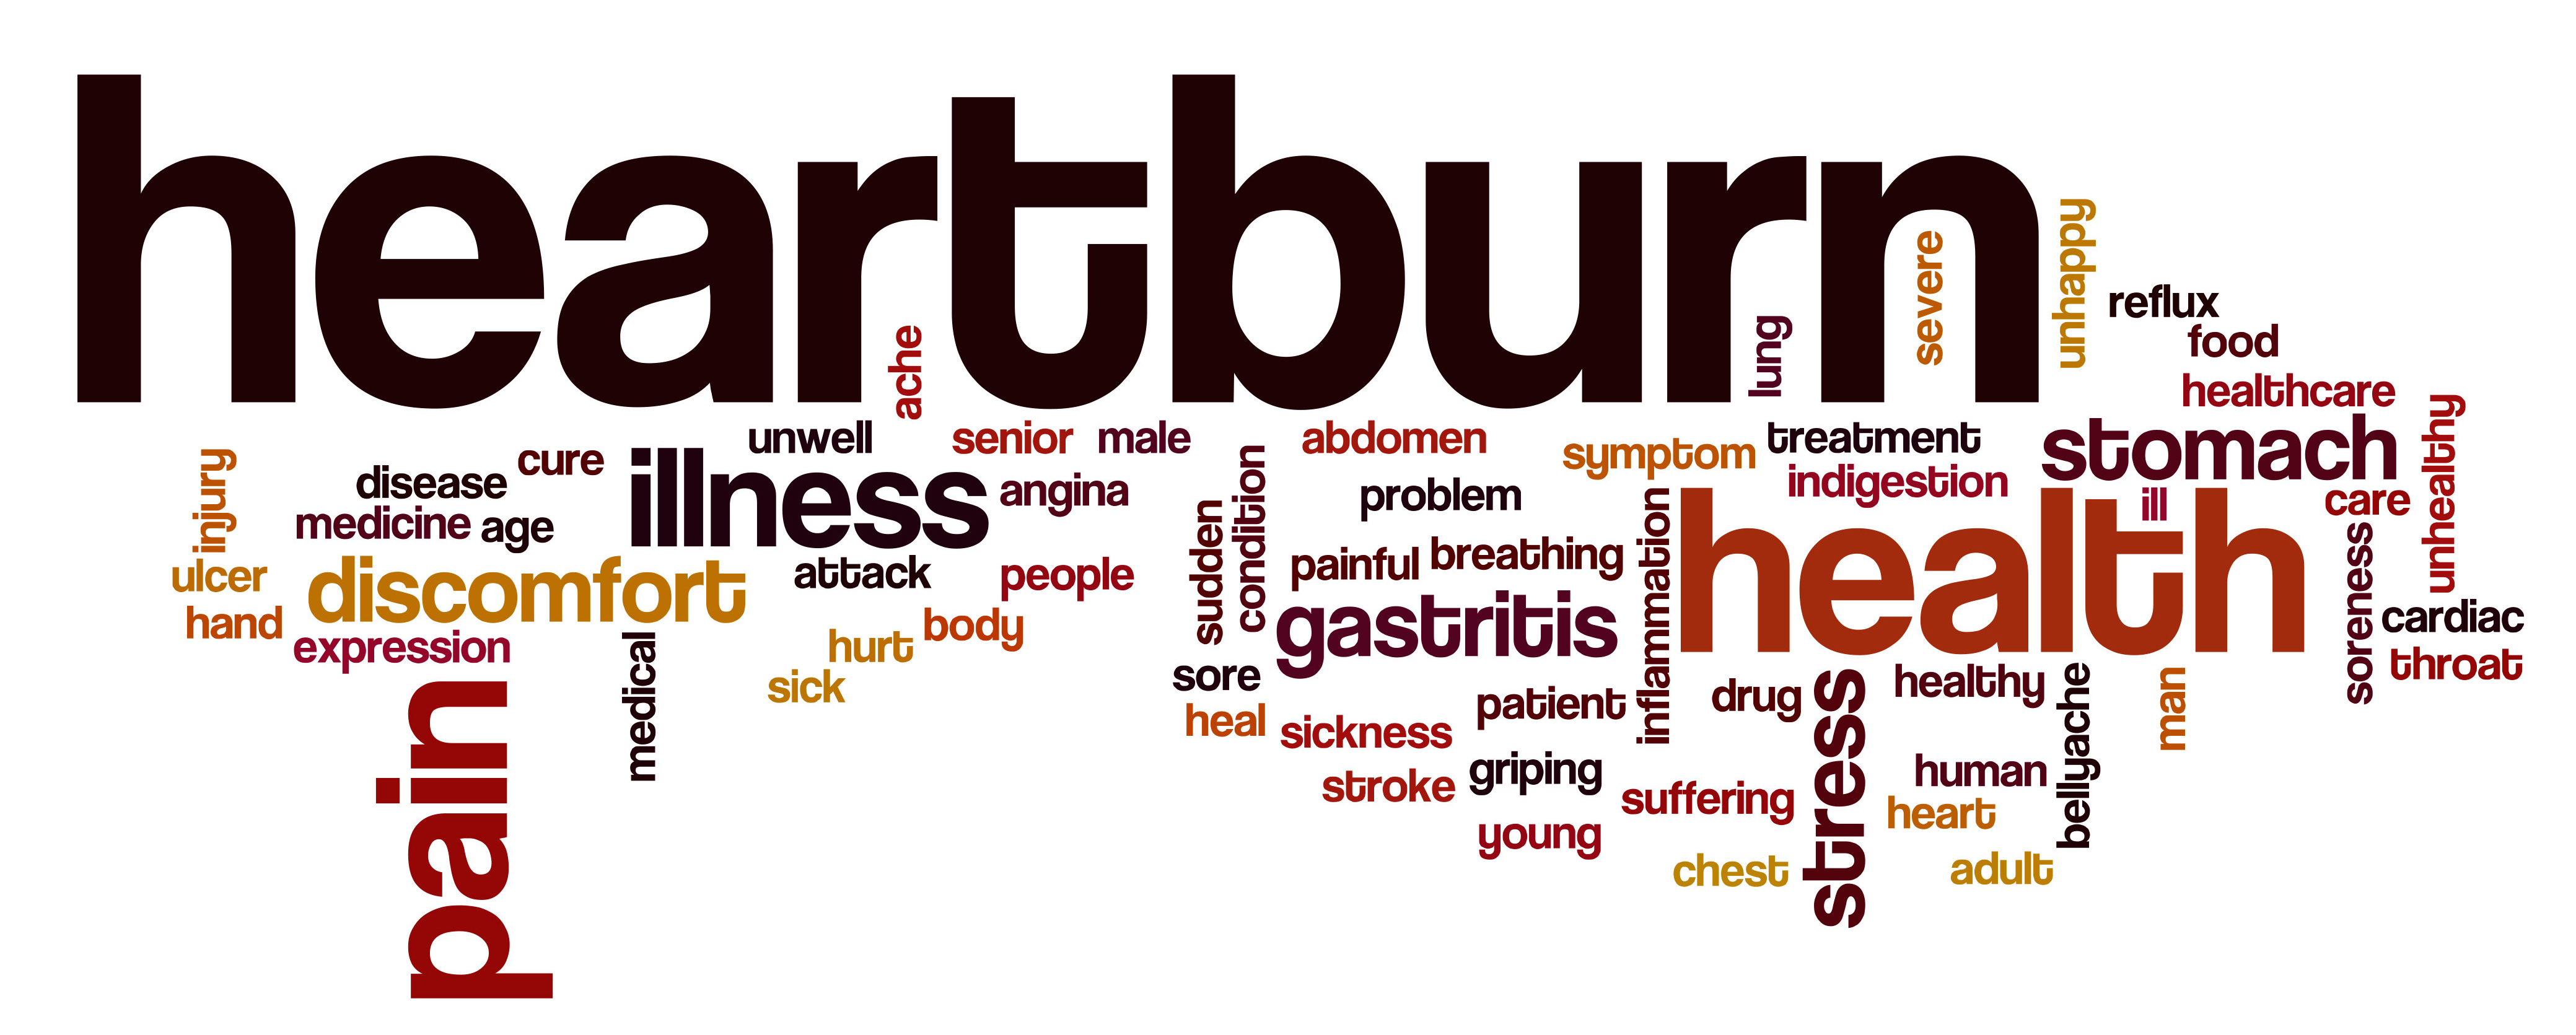 Heartburn word cloud